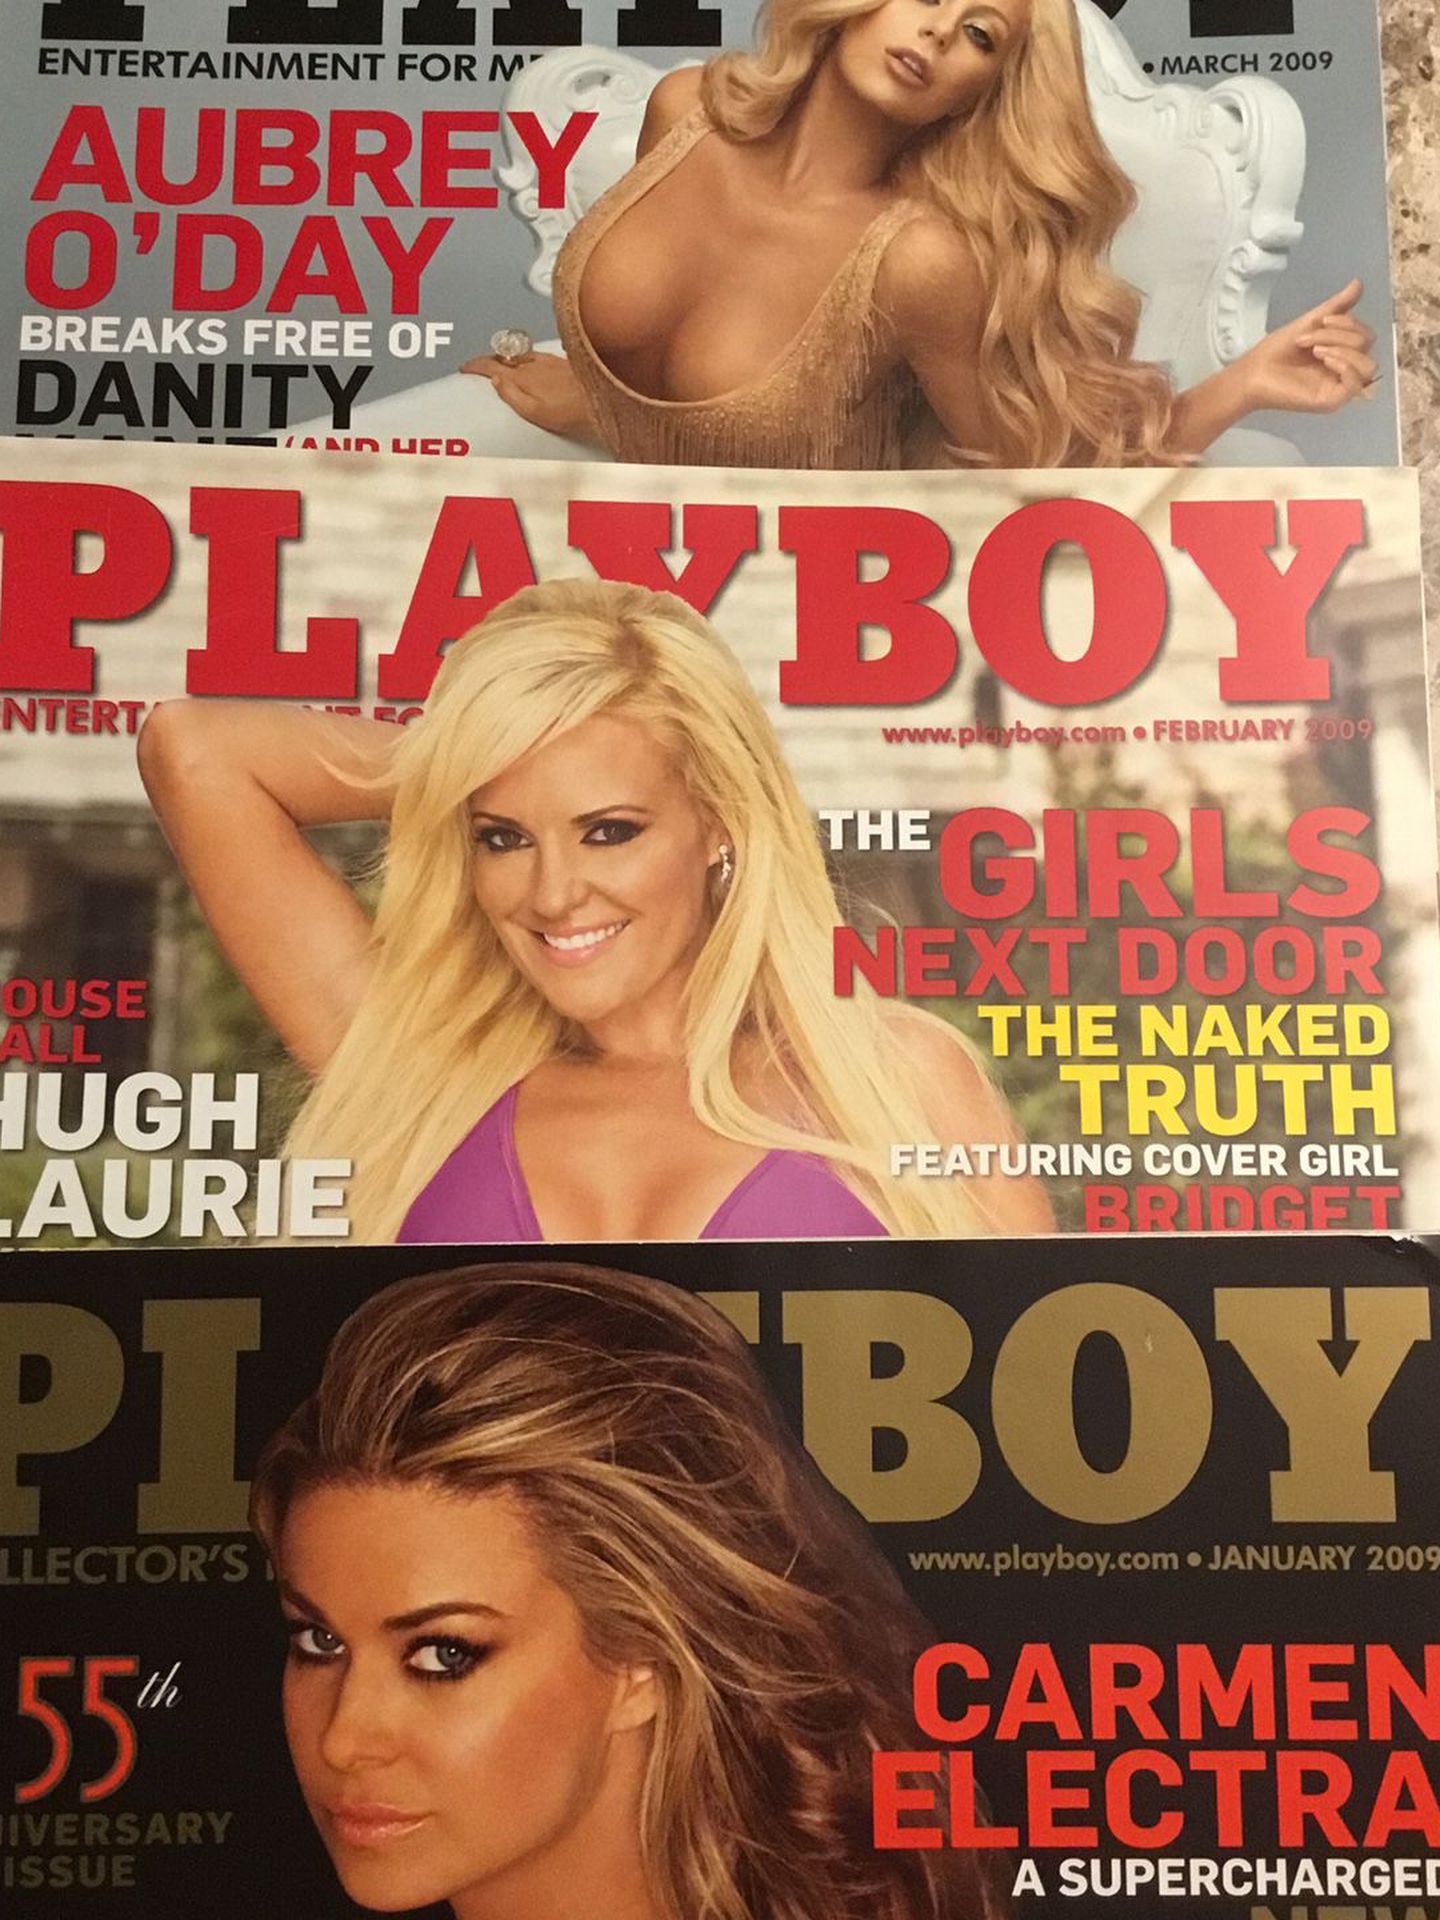 Playboy Magazine: Complete 2009, Carmen Electra, Aubrey O’ Day & more... Cheaper Than eBay